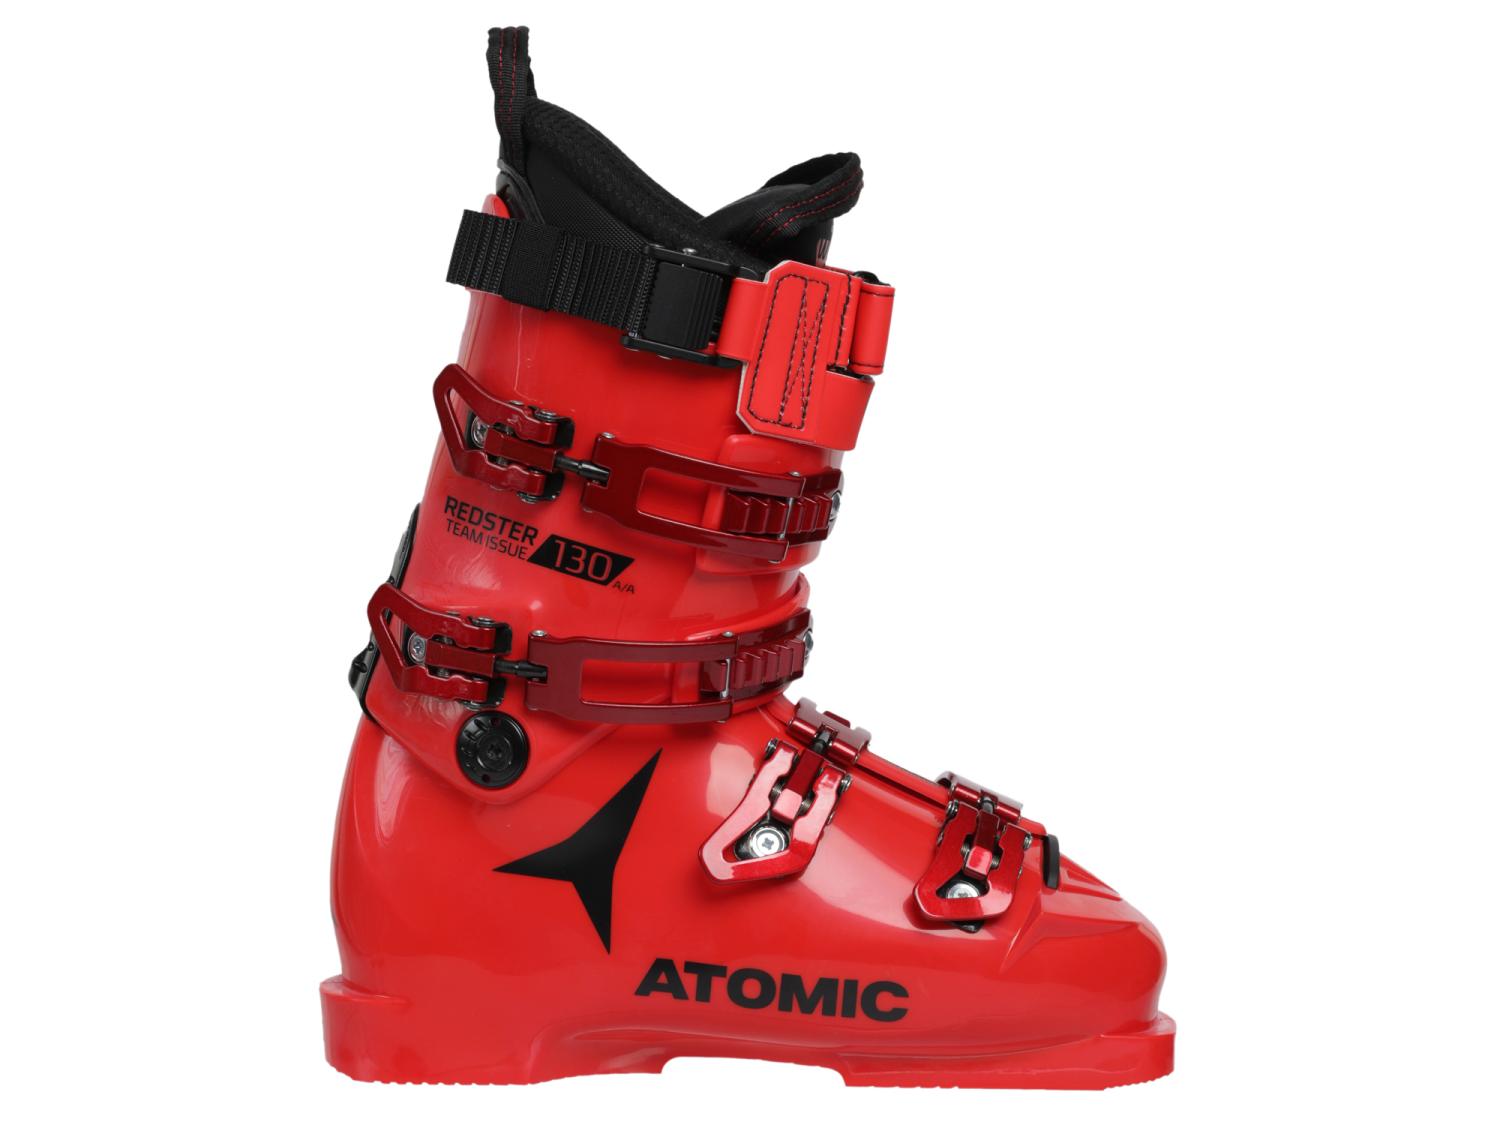 Ботинки горнолыжные Atomic 20-21 Redster Team Issue 130 Red/Black лыжные палки skigo race 1 0 power strap 1 0 карбон 100% 39